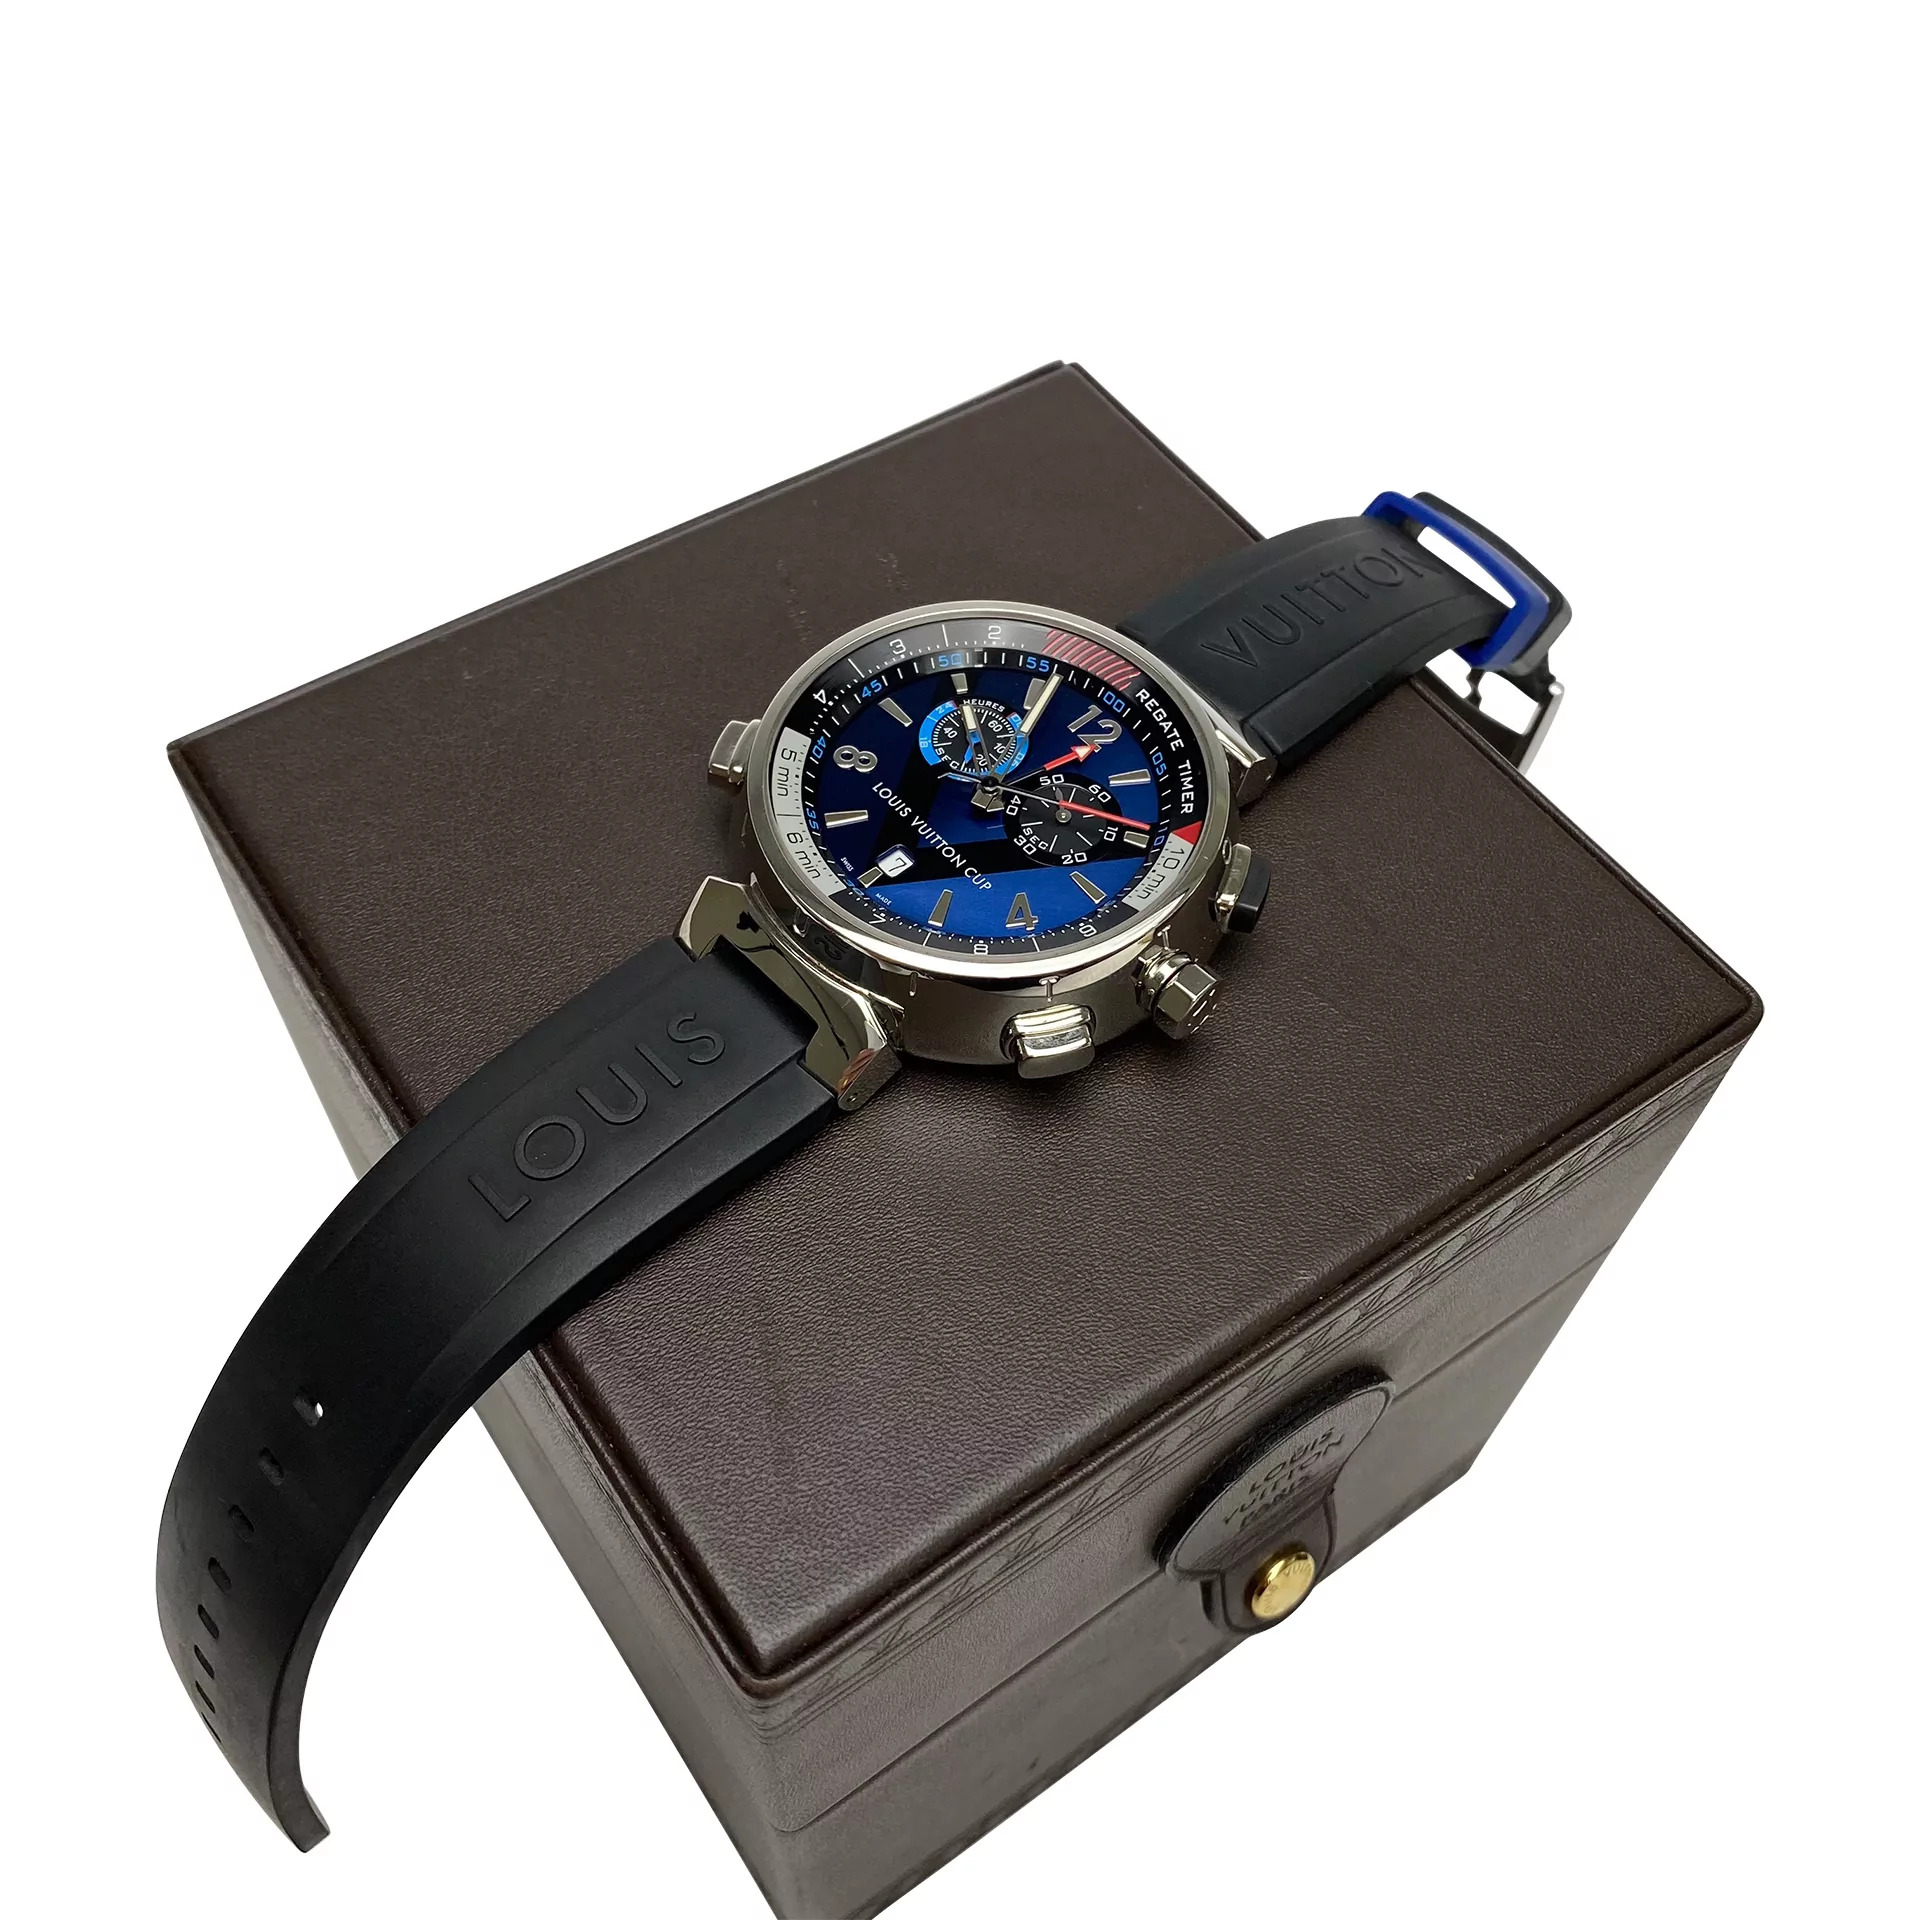 Relógio Louis Vuitton Tambour Regatta Cronograph Navy 44